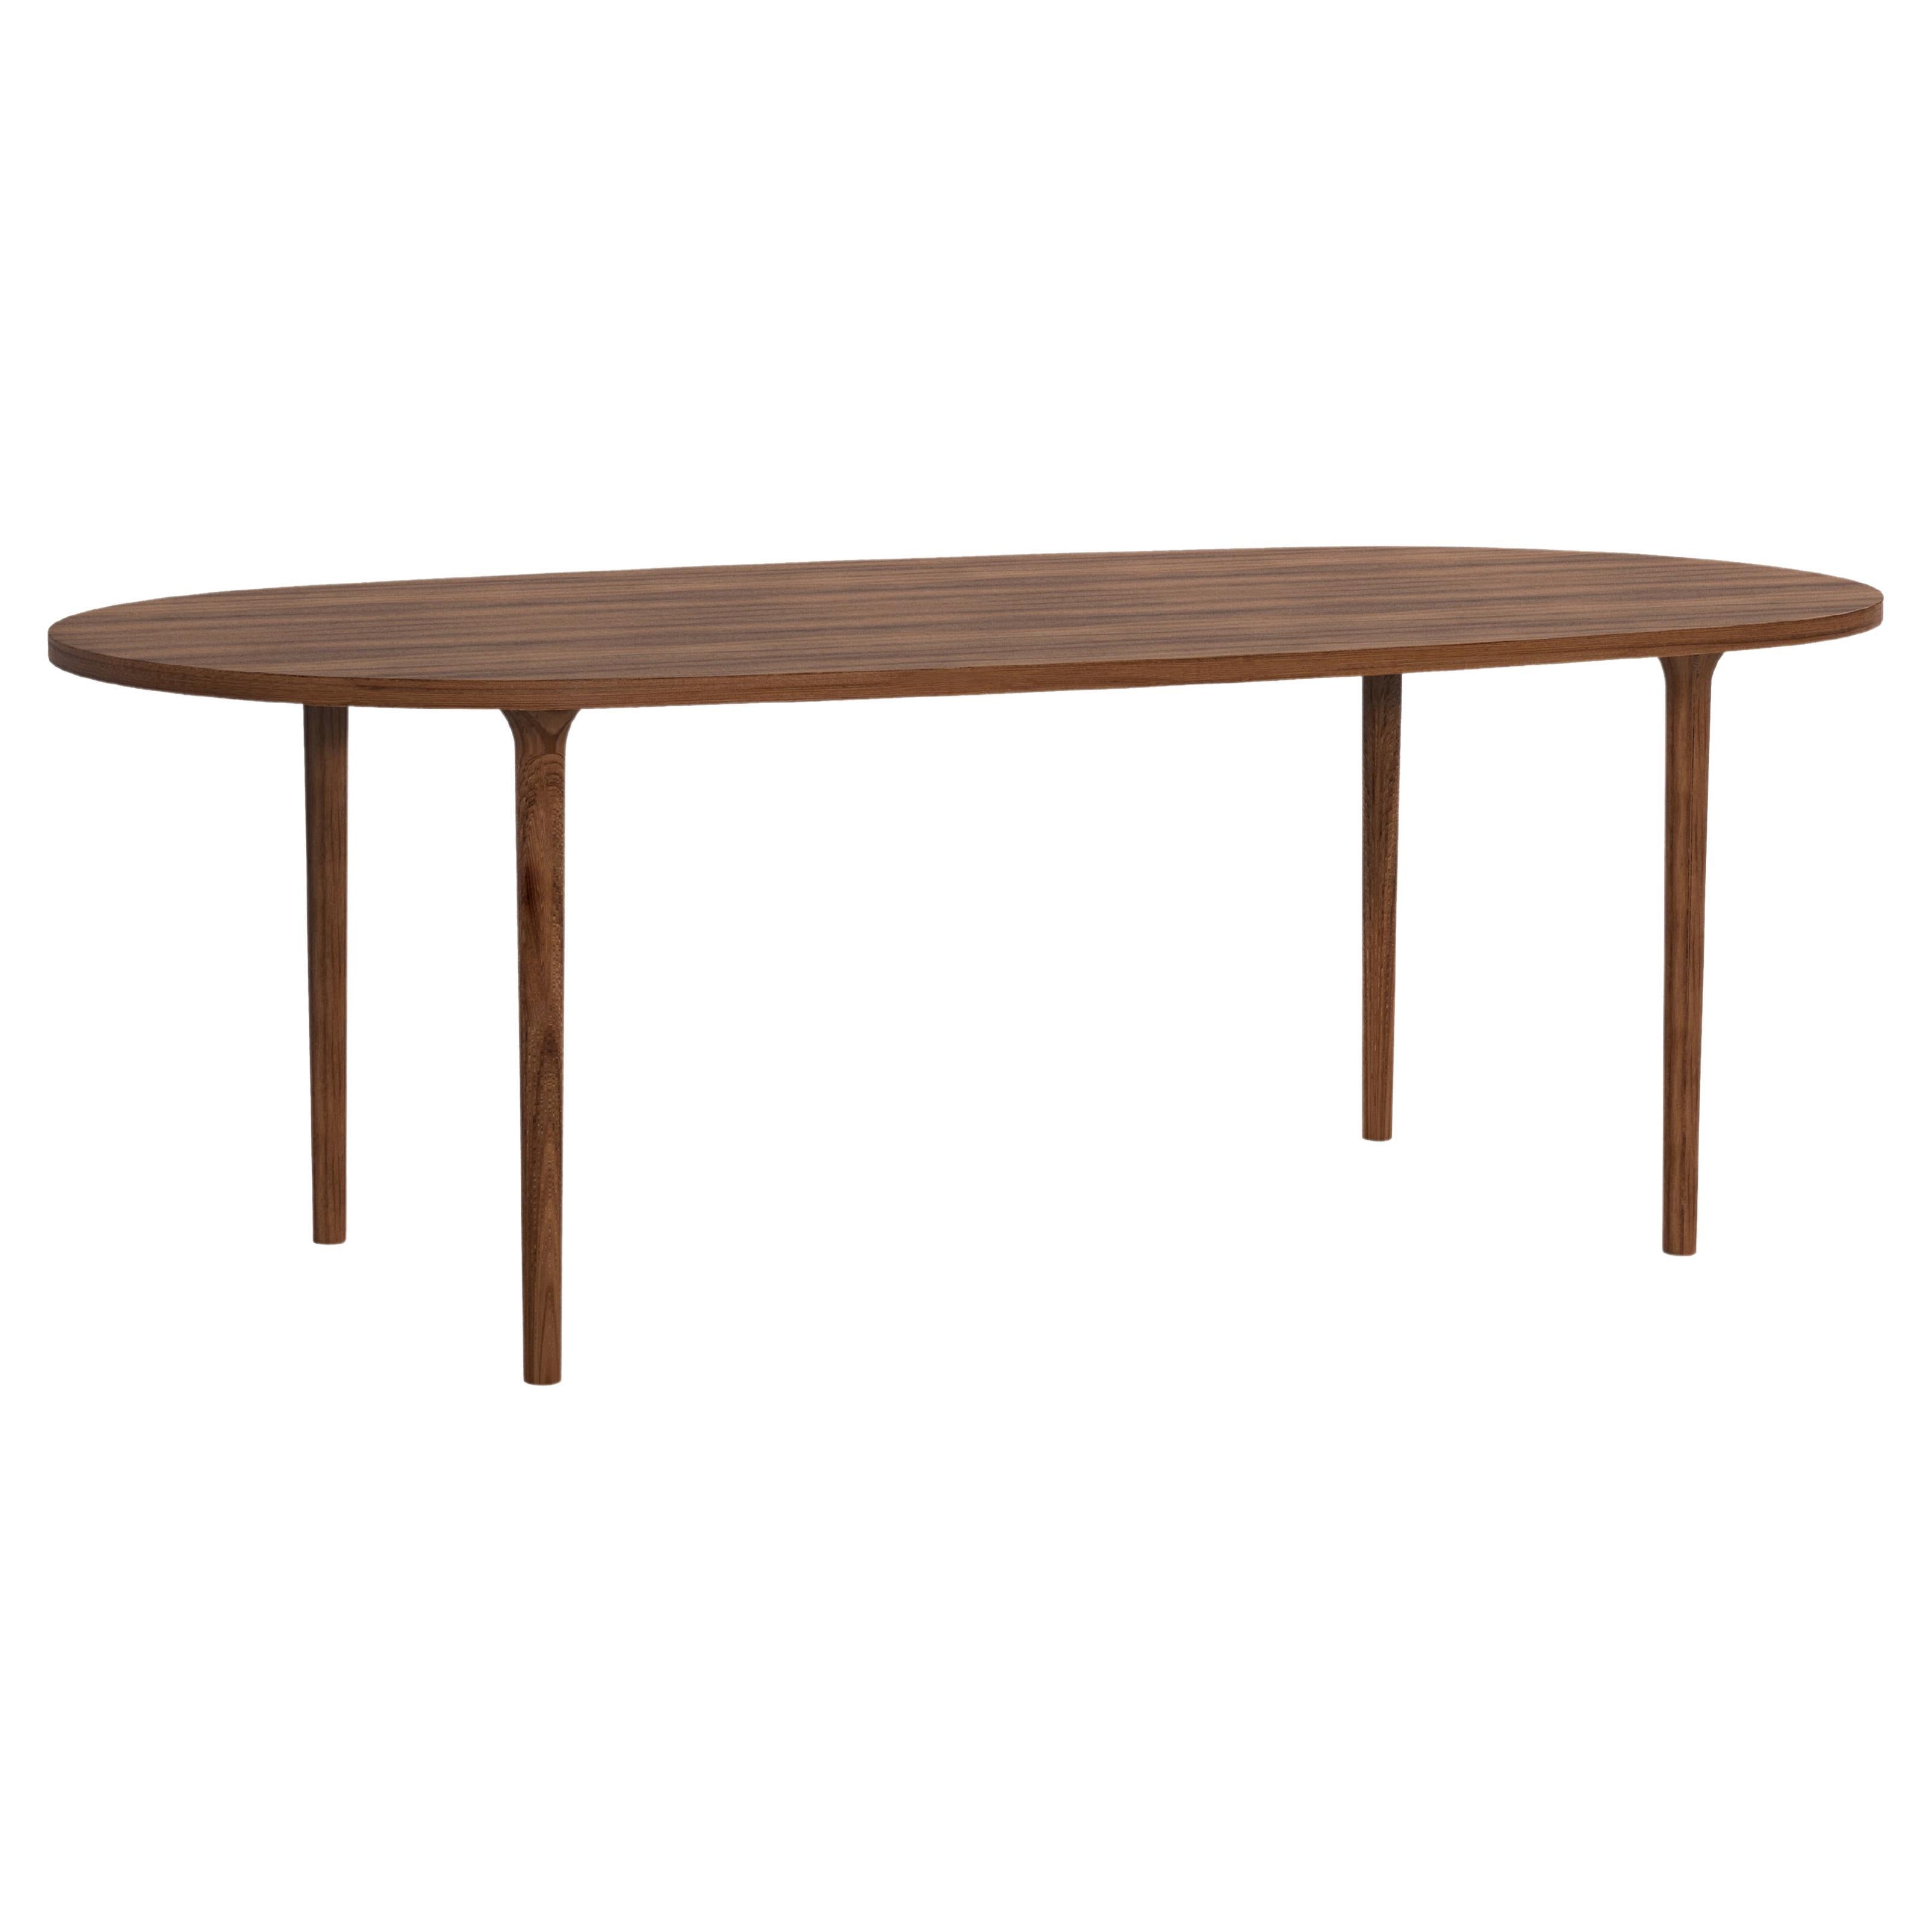 Table ovale minimaliste et moderne en bois de noyer